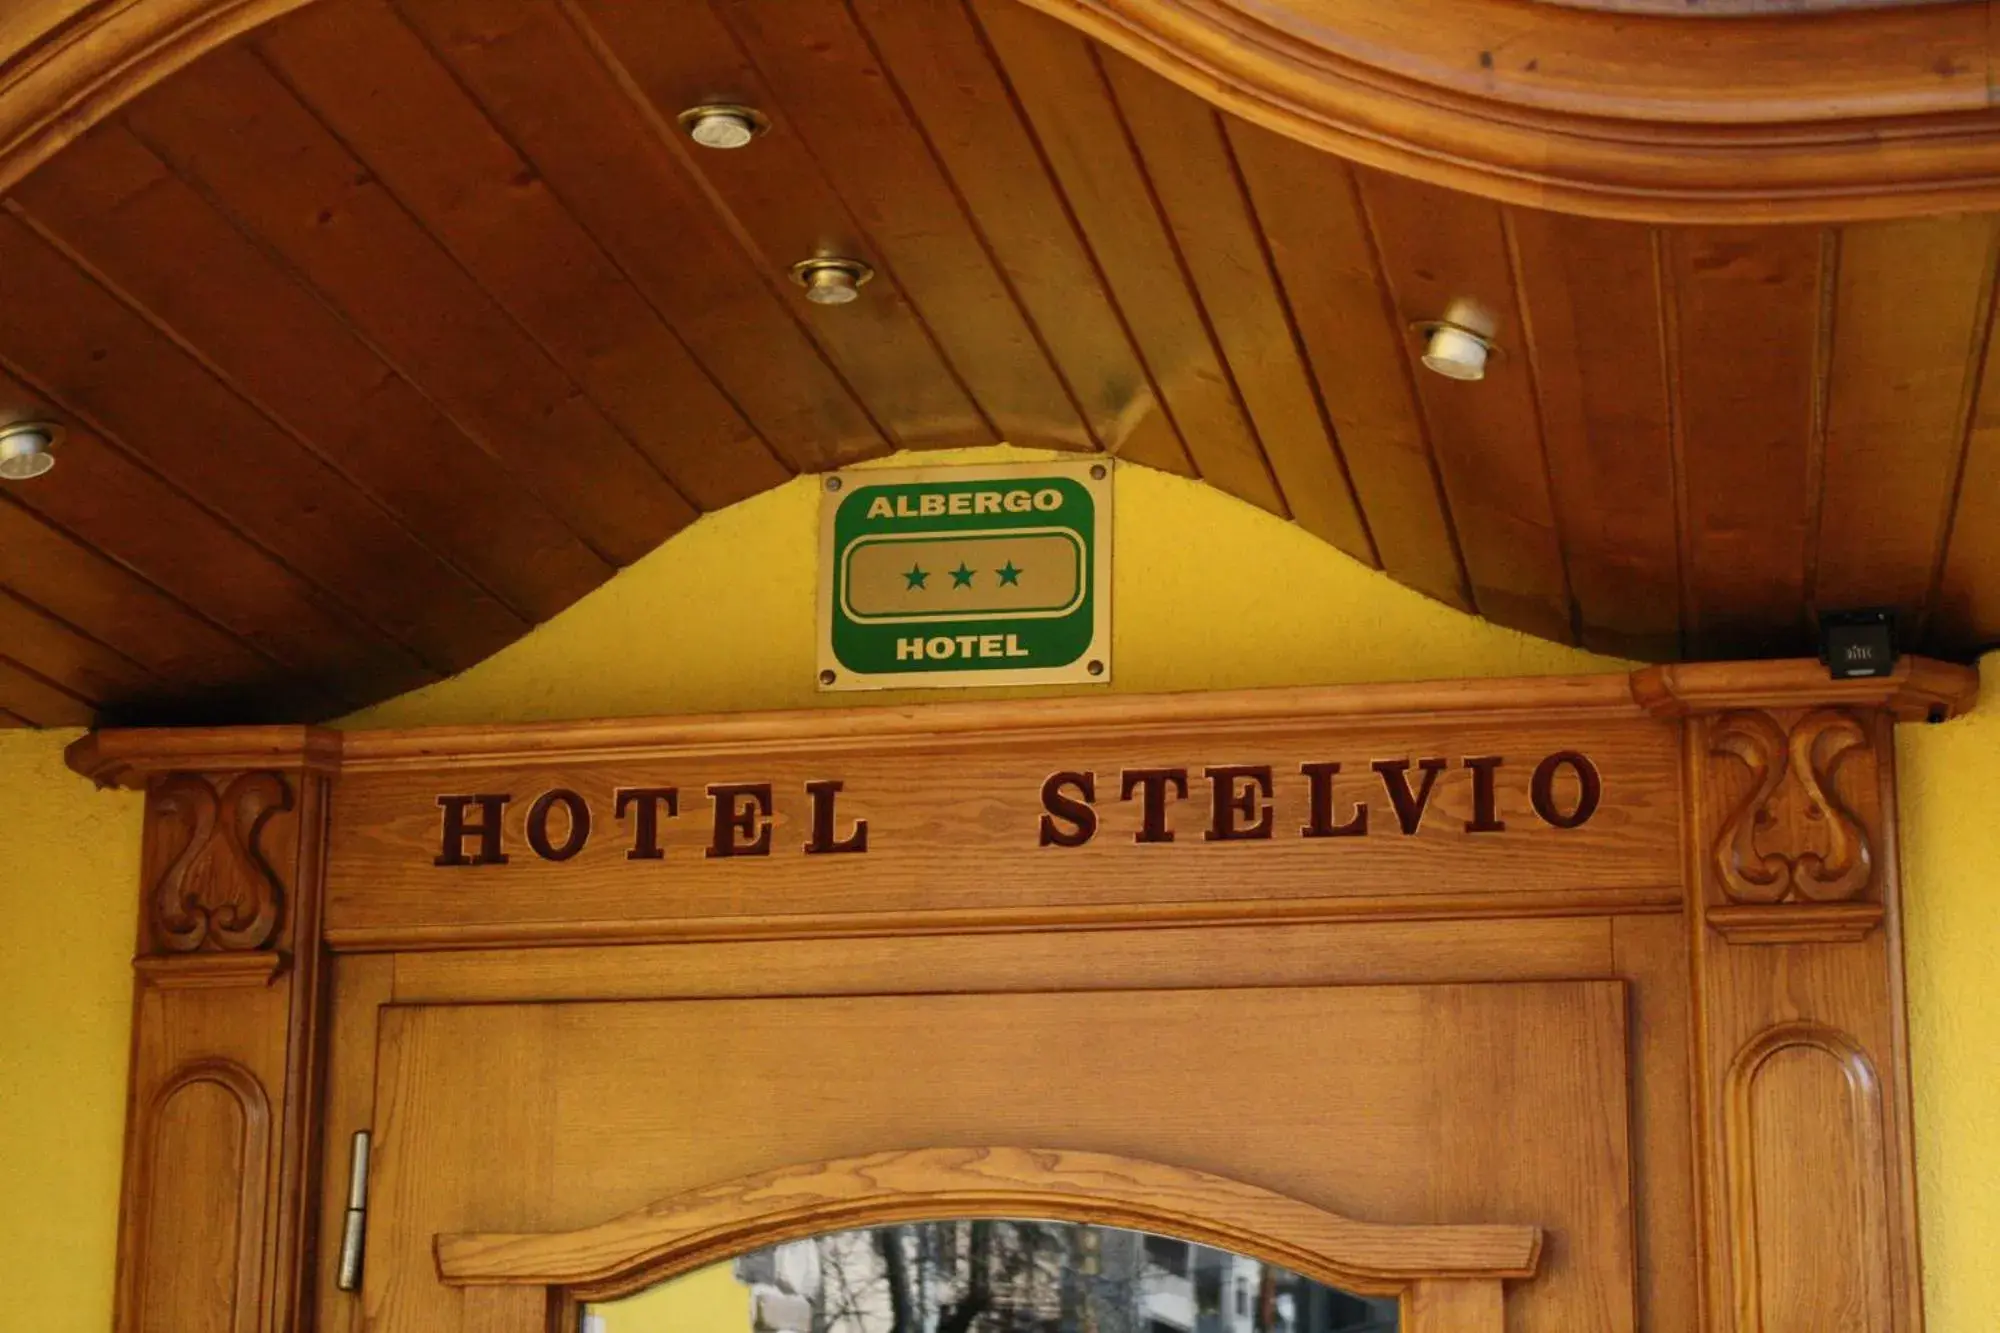 Property logo or sign in Hotel Stelvio